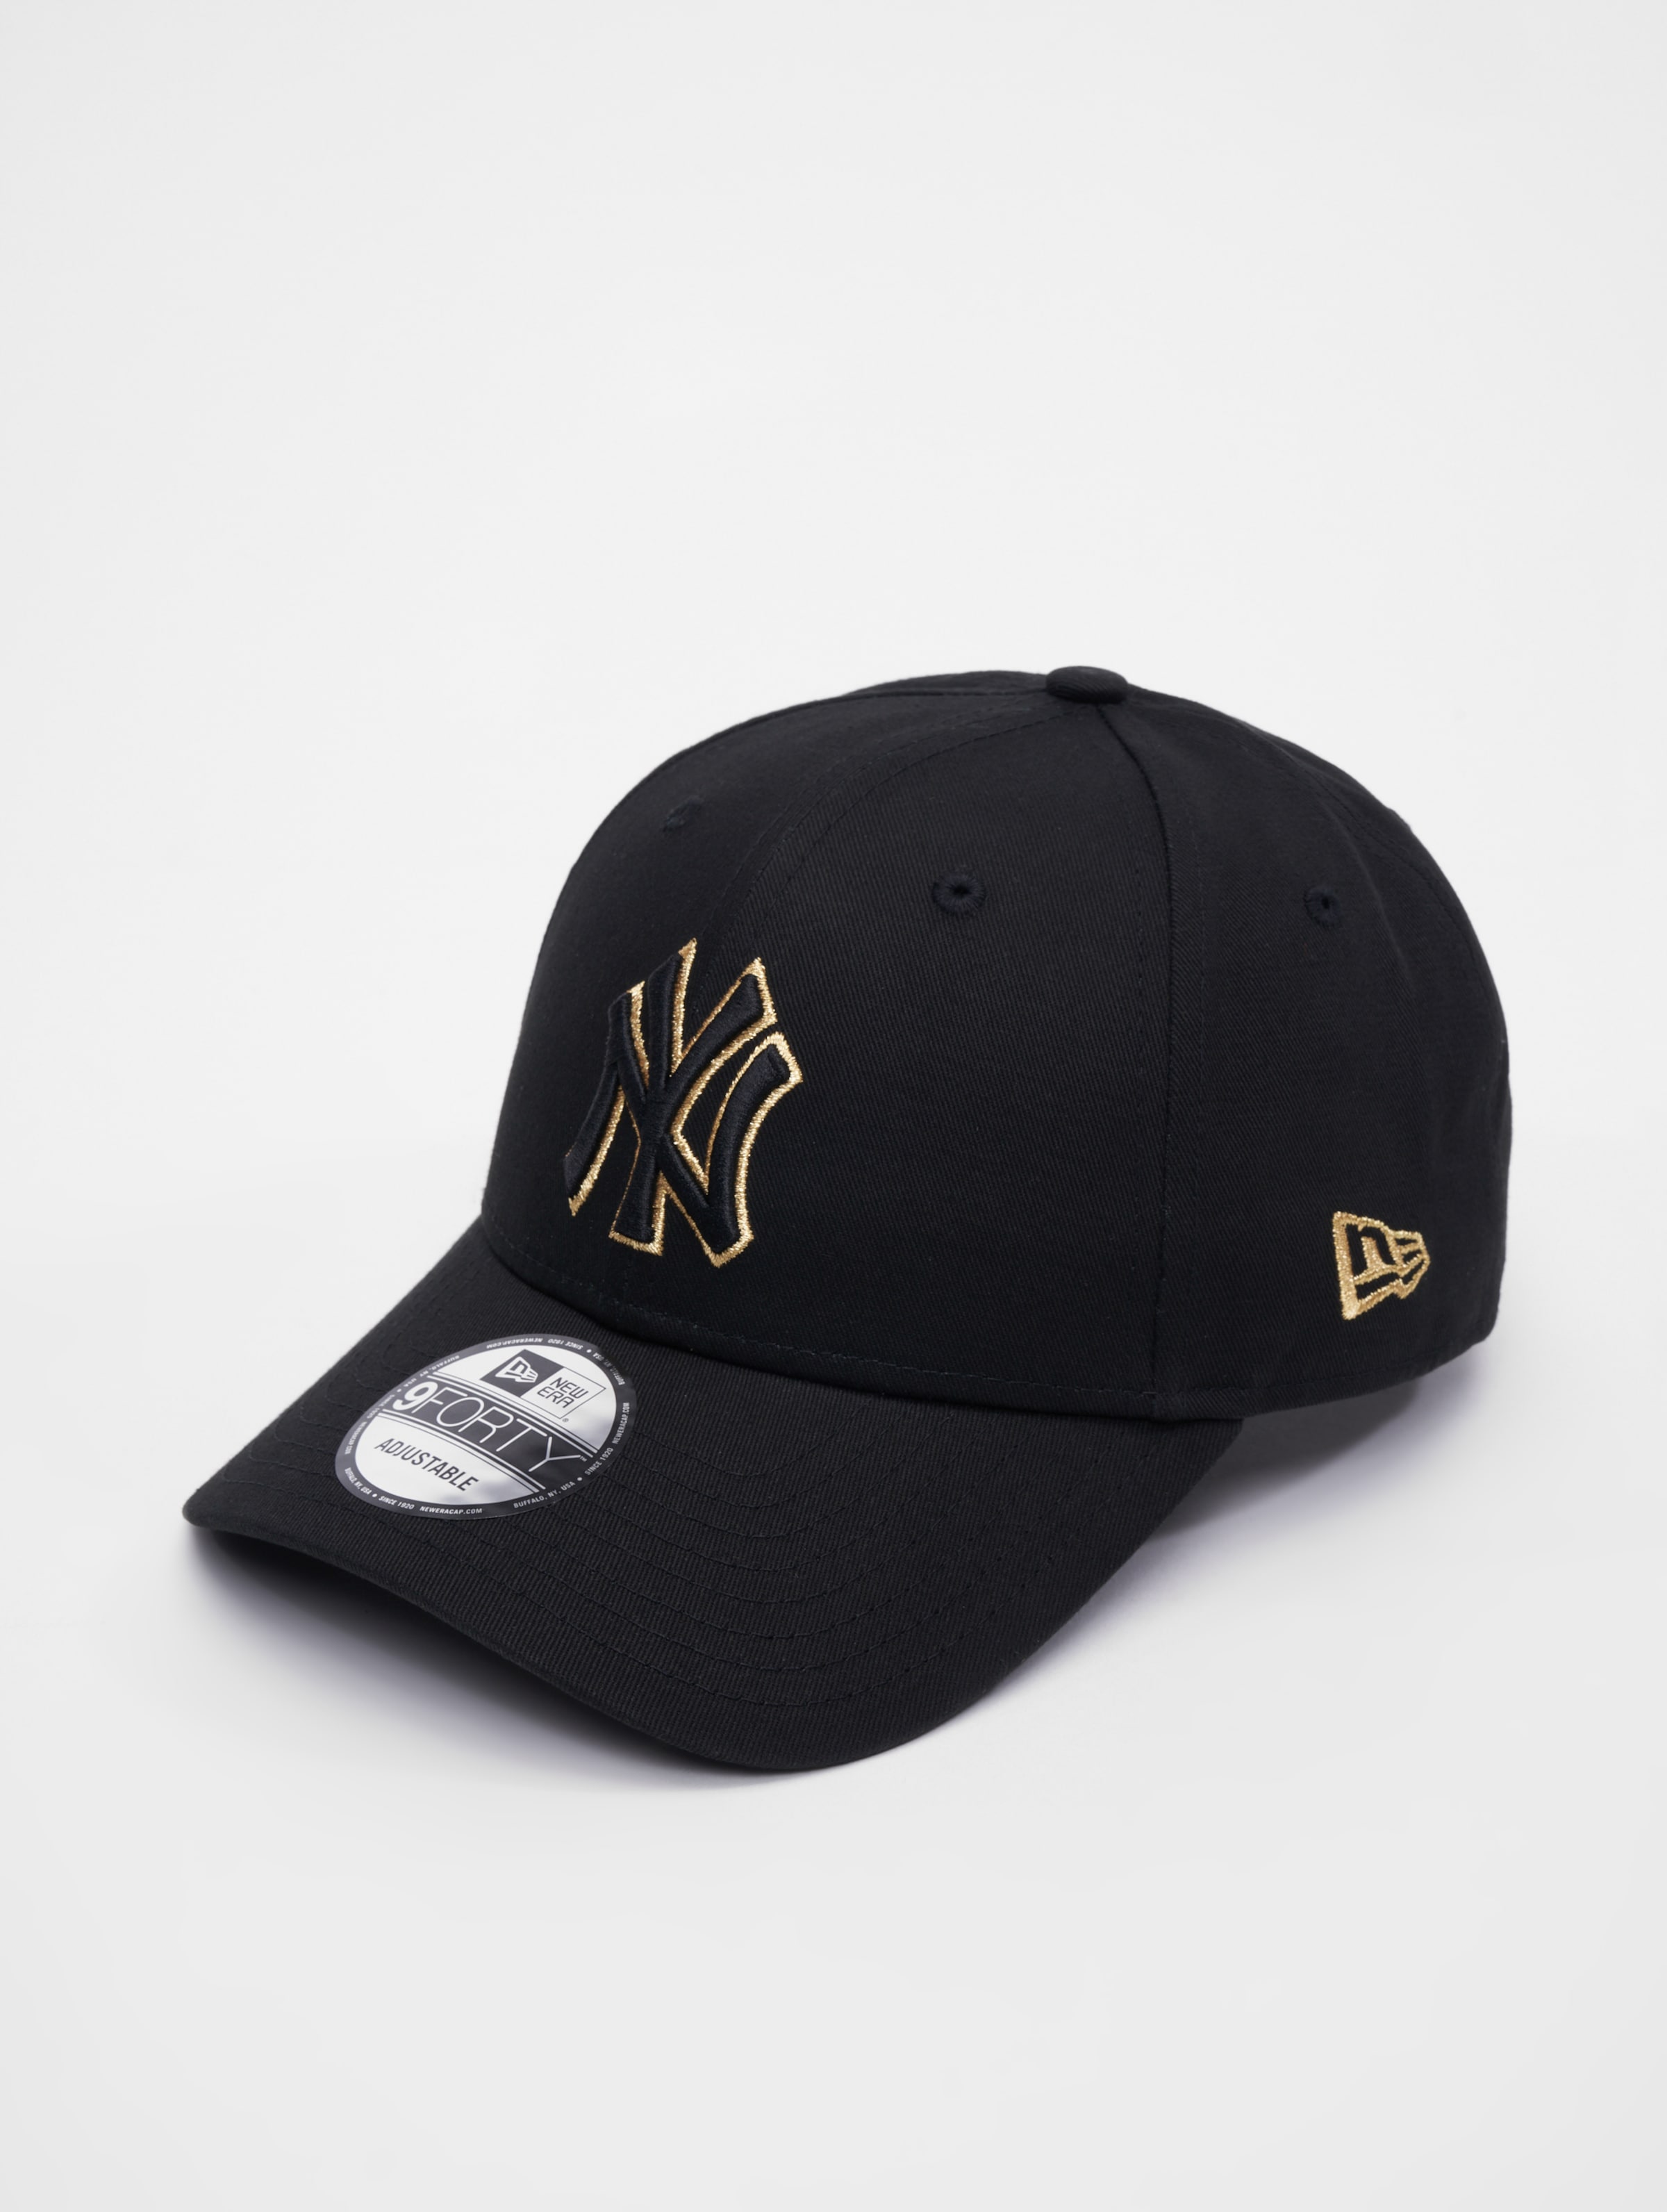 New Era - New York Yankees Metallic Outline Gold/ Black 9FORTY Adjustable Cap